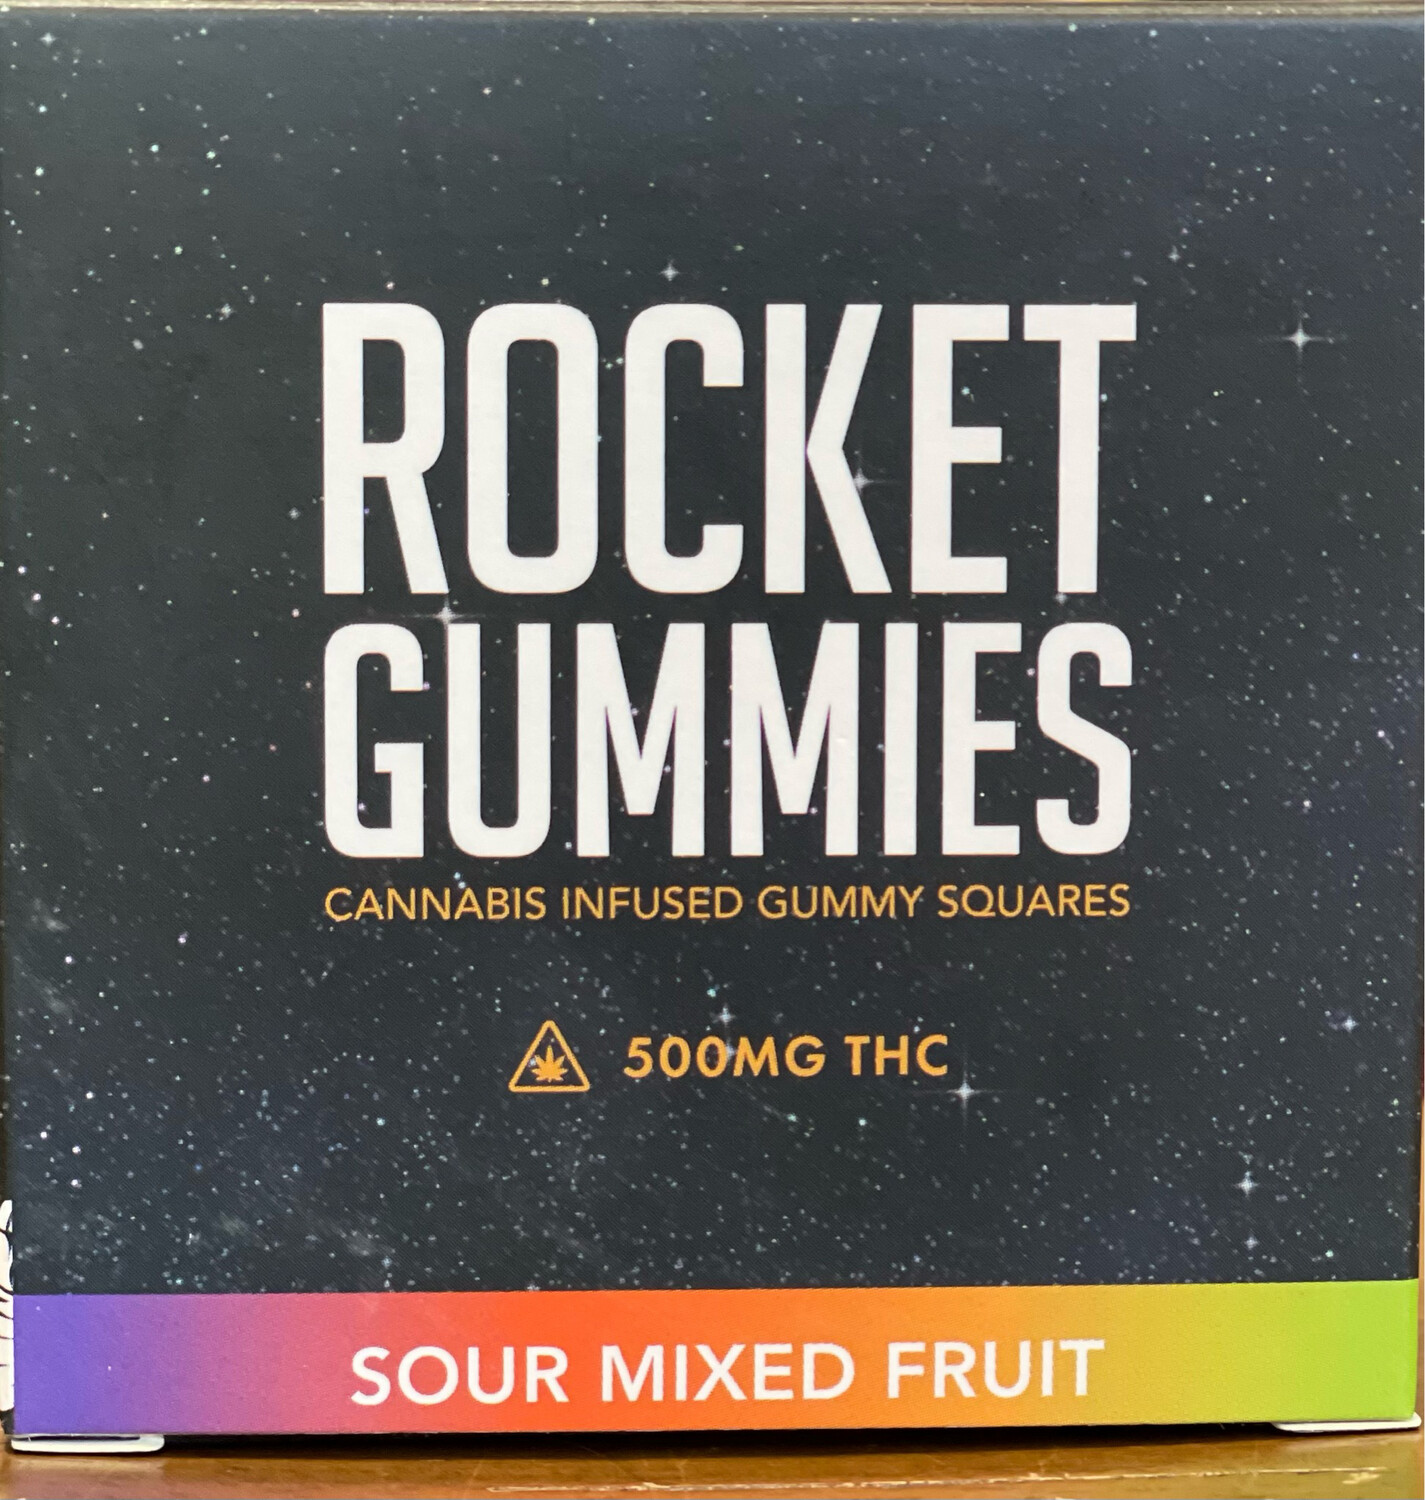 Sour Rocket Gummies 500MG